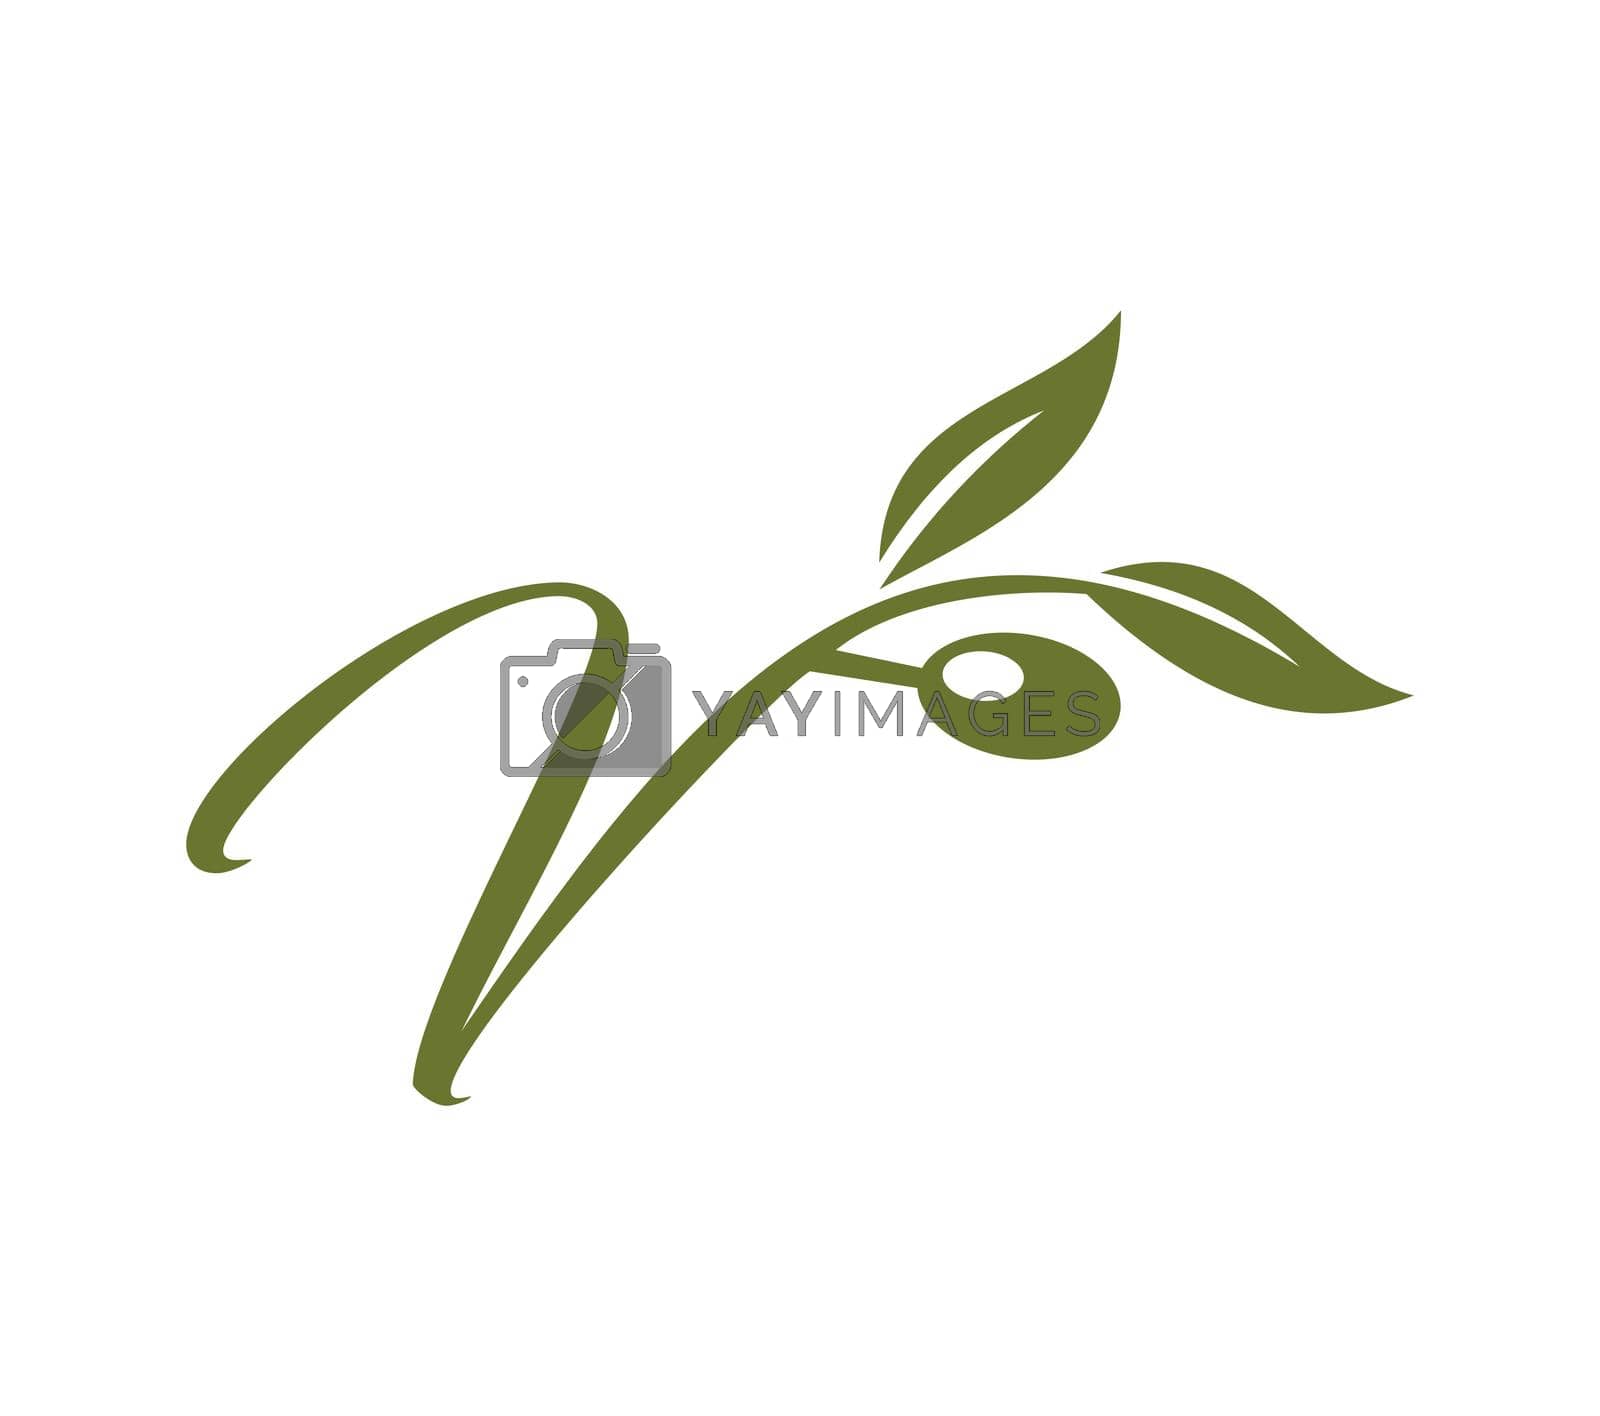 Royalty free image of Grape Vine Monogram Initial Logo Letter V by Up2date